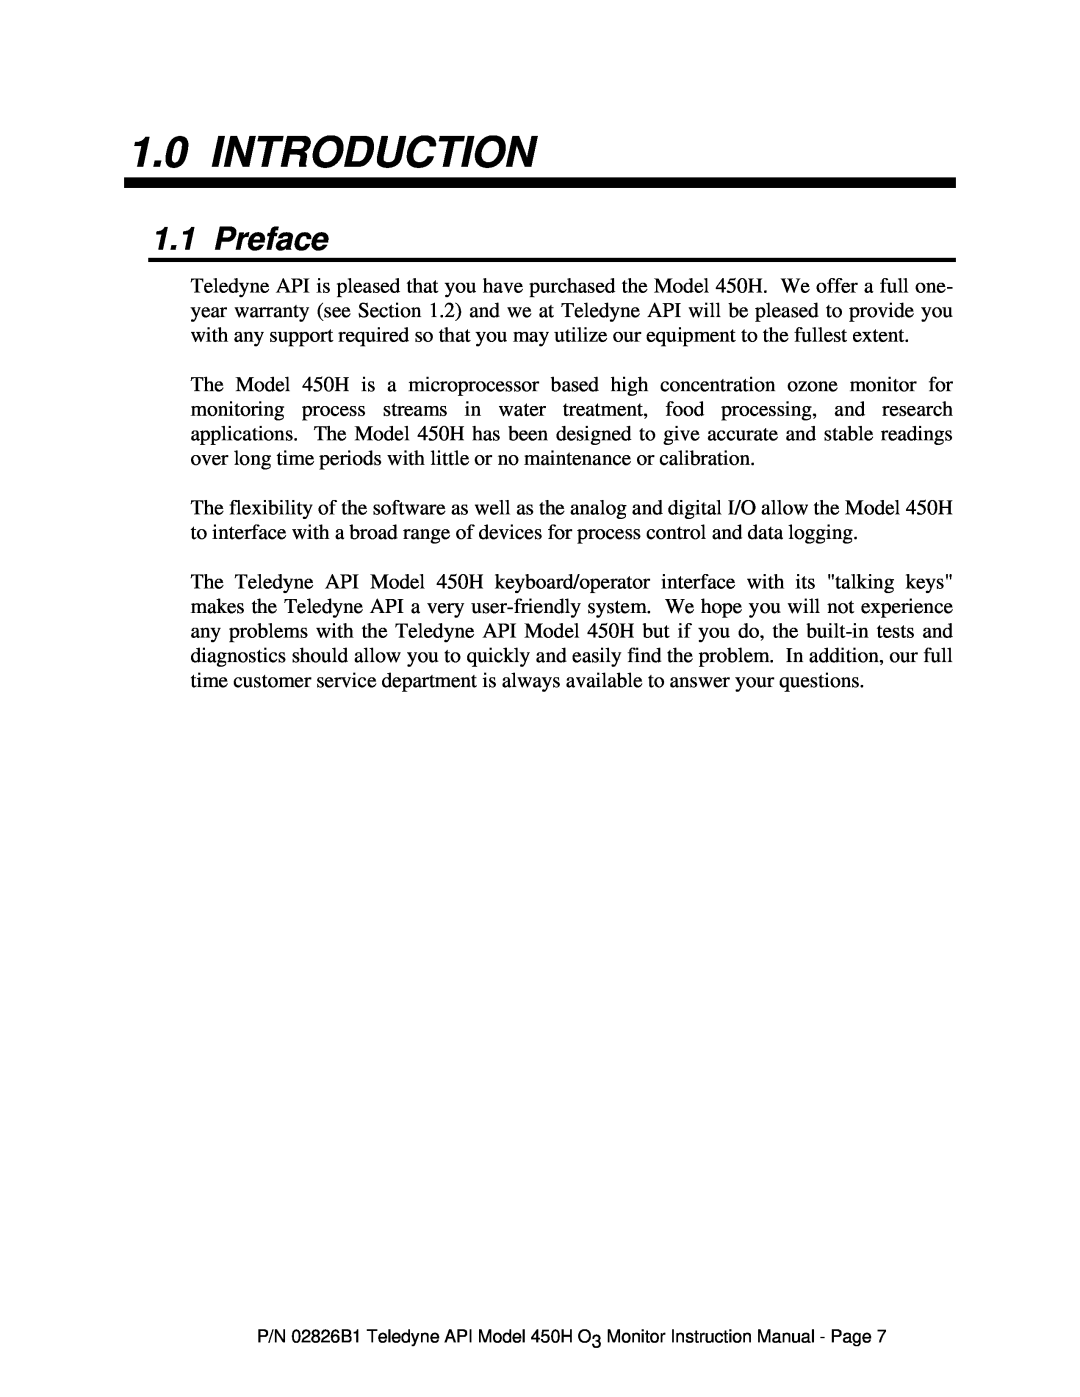 Teledyne 450H instruction manual 1.0INTRODUCTION, 1.1Preface 